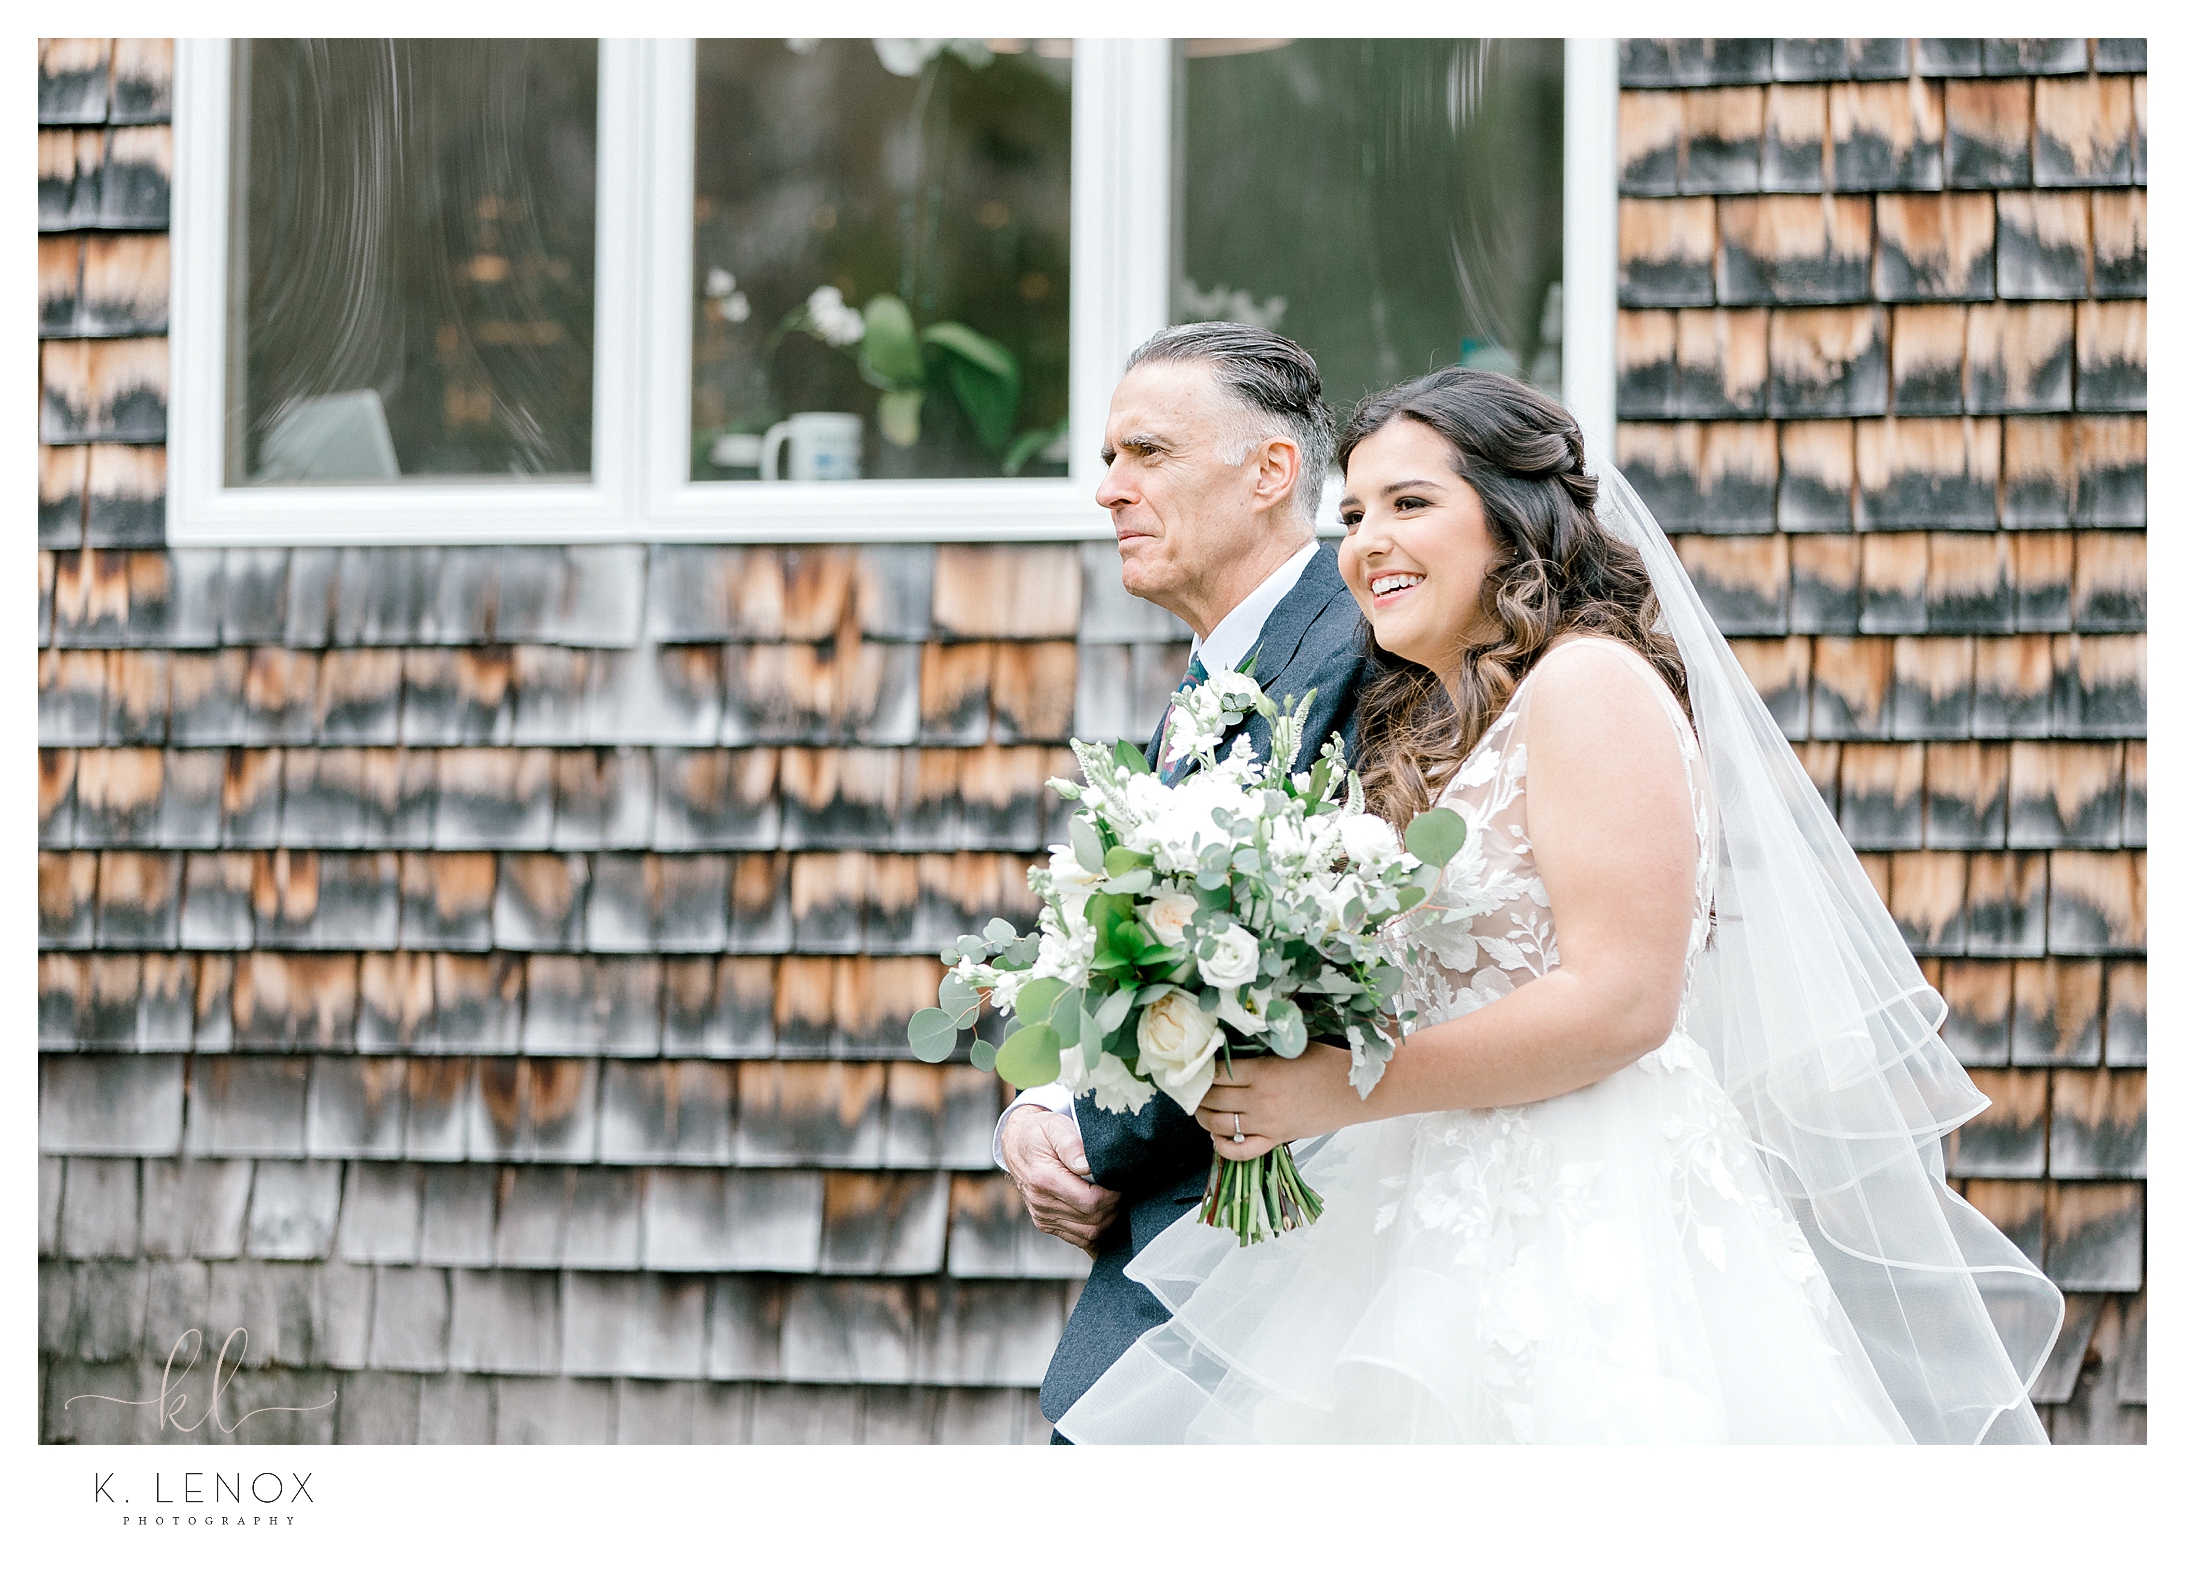 Beautiful Backyard Micro Wedding - Father Walking Bride down the aisle. 